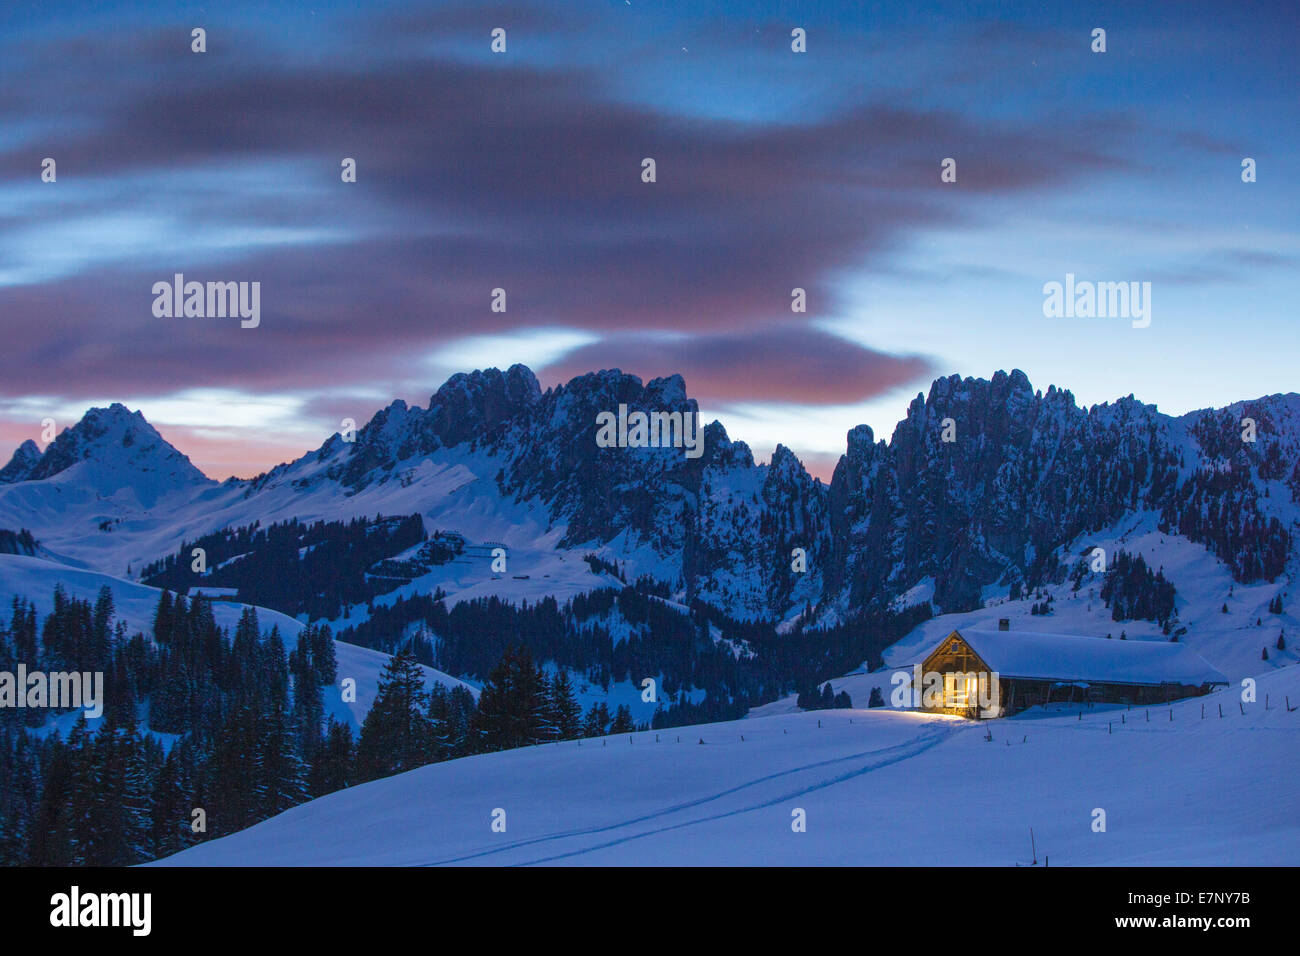 Gastlosen, alpine cabin, Jaunpass, mountain, mountains, hut, house, alpine cabin, winter, canton Bern, canton, FR, Fribourg, Fre Stock Photo